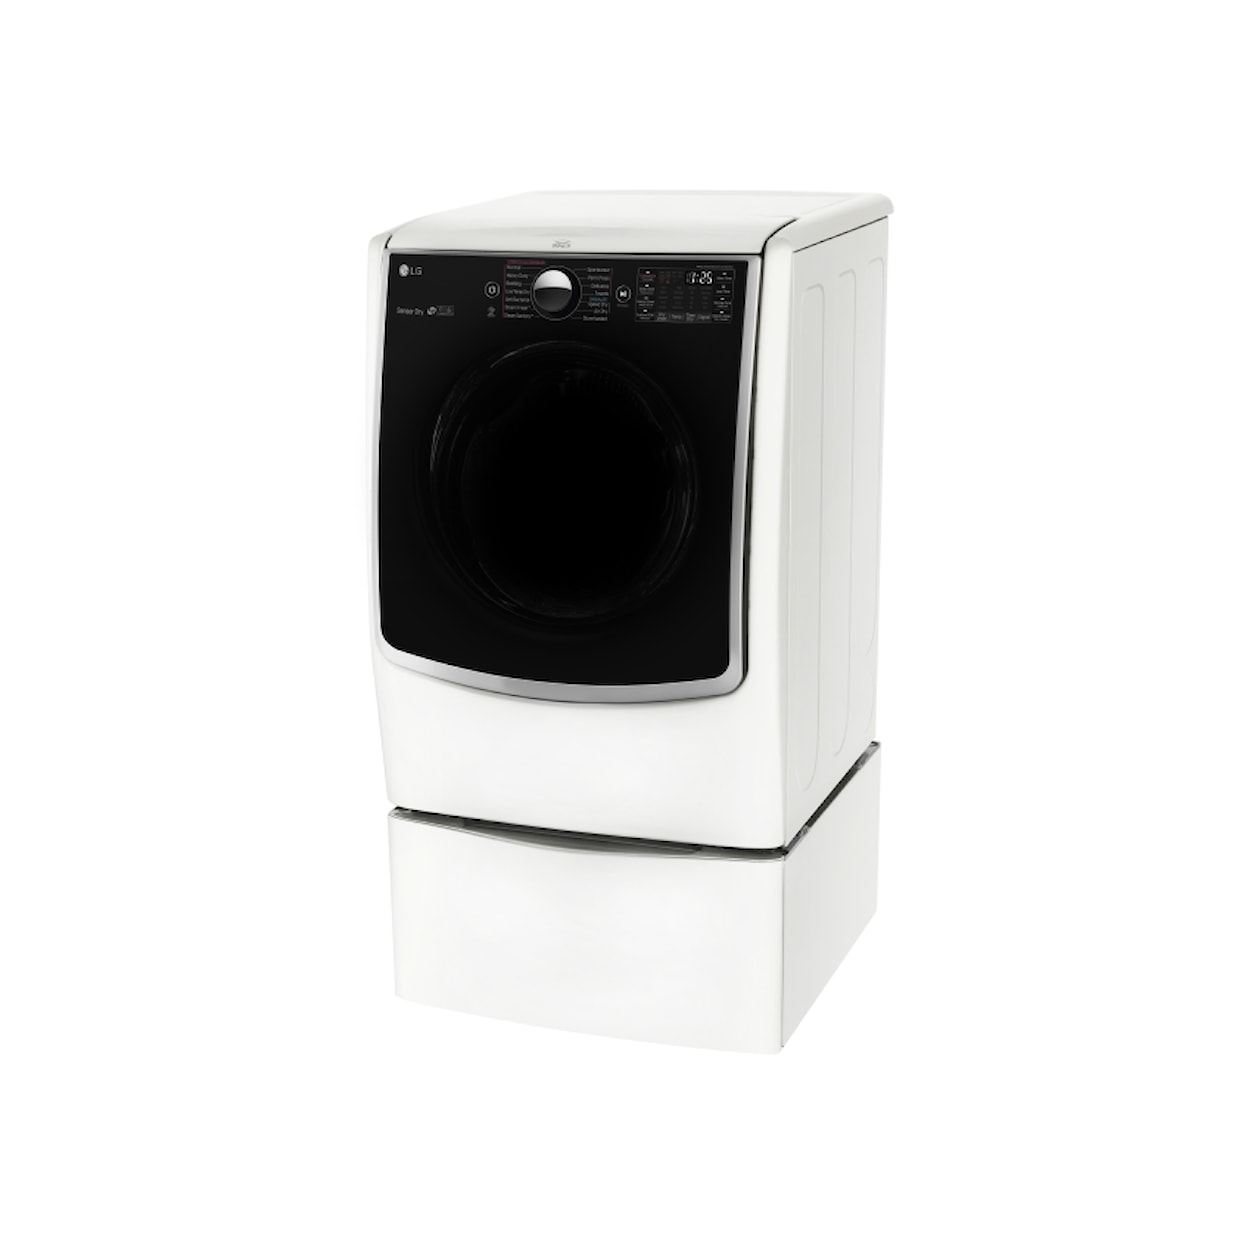 LG Appliances Dryers 7.4 Cu. Ft. Capacity Electric Dryer